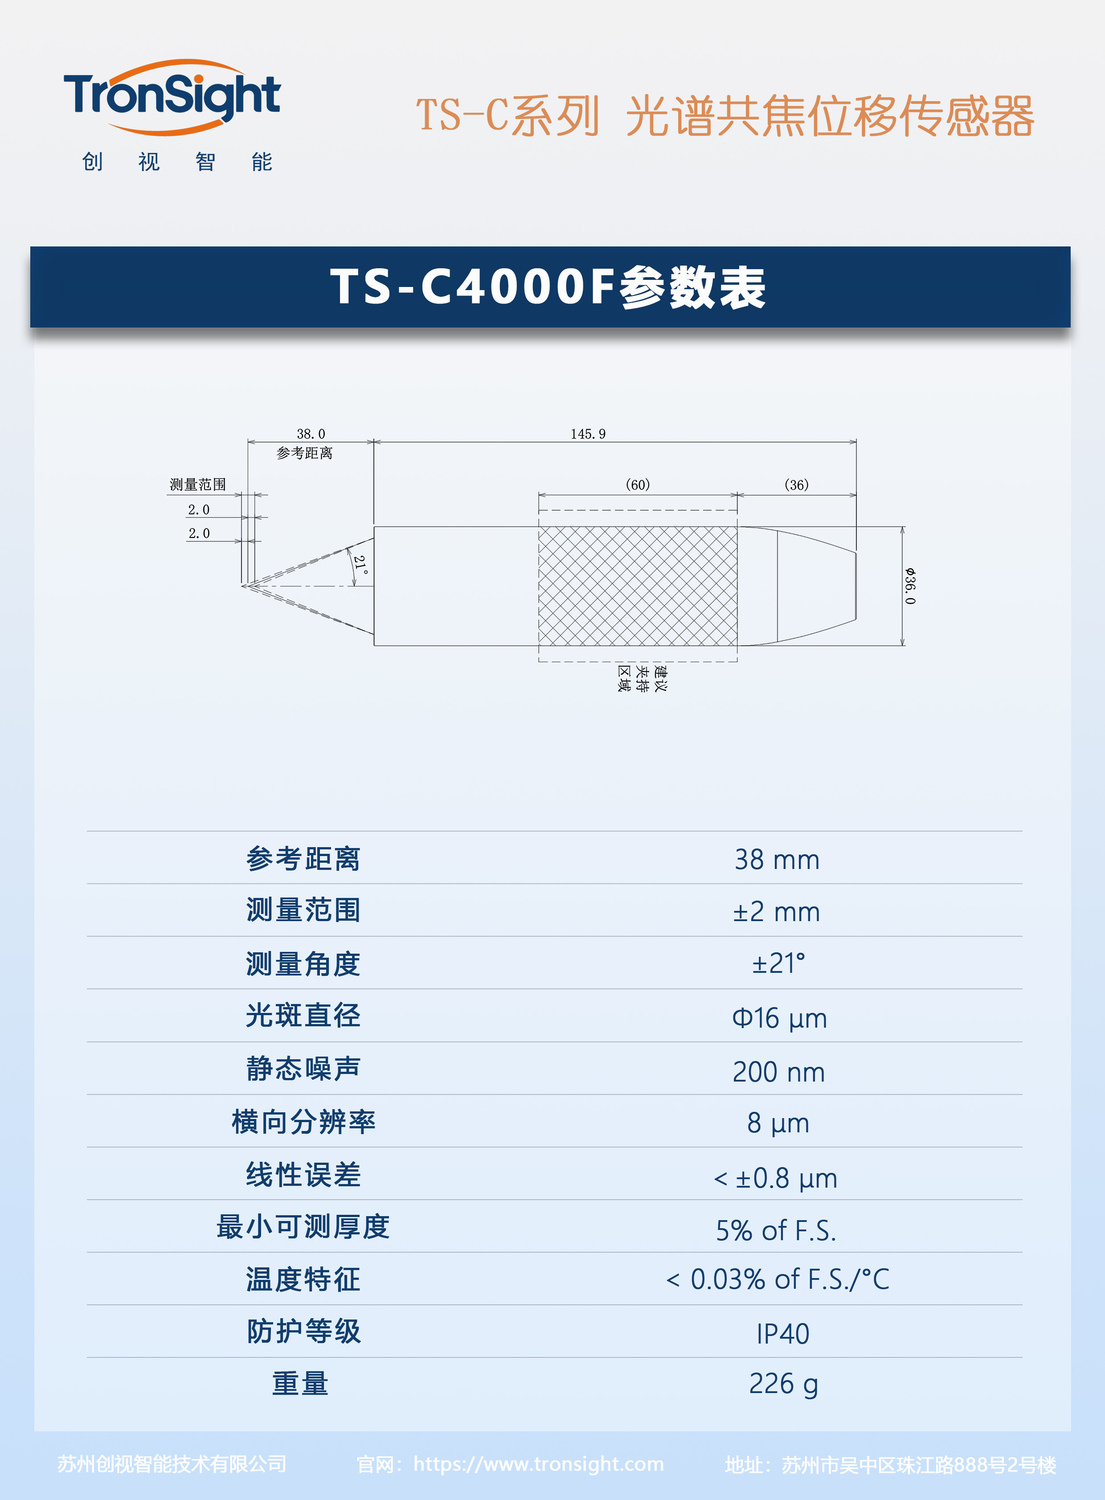 TS-C4000F.jpg